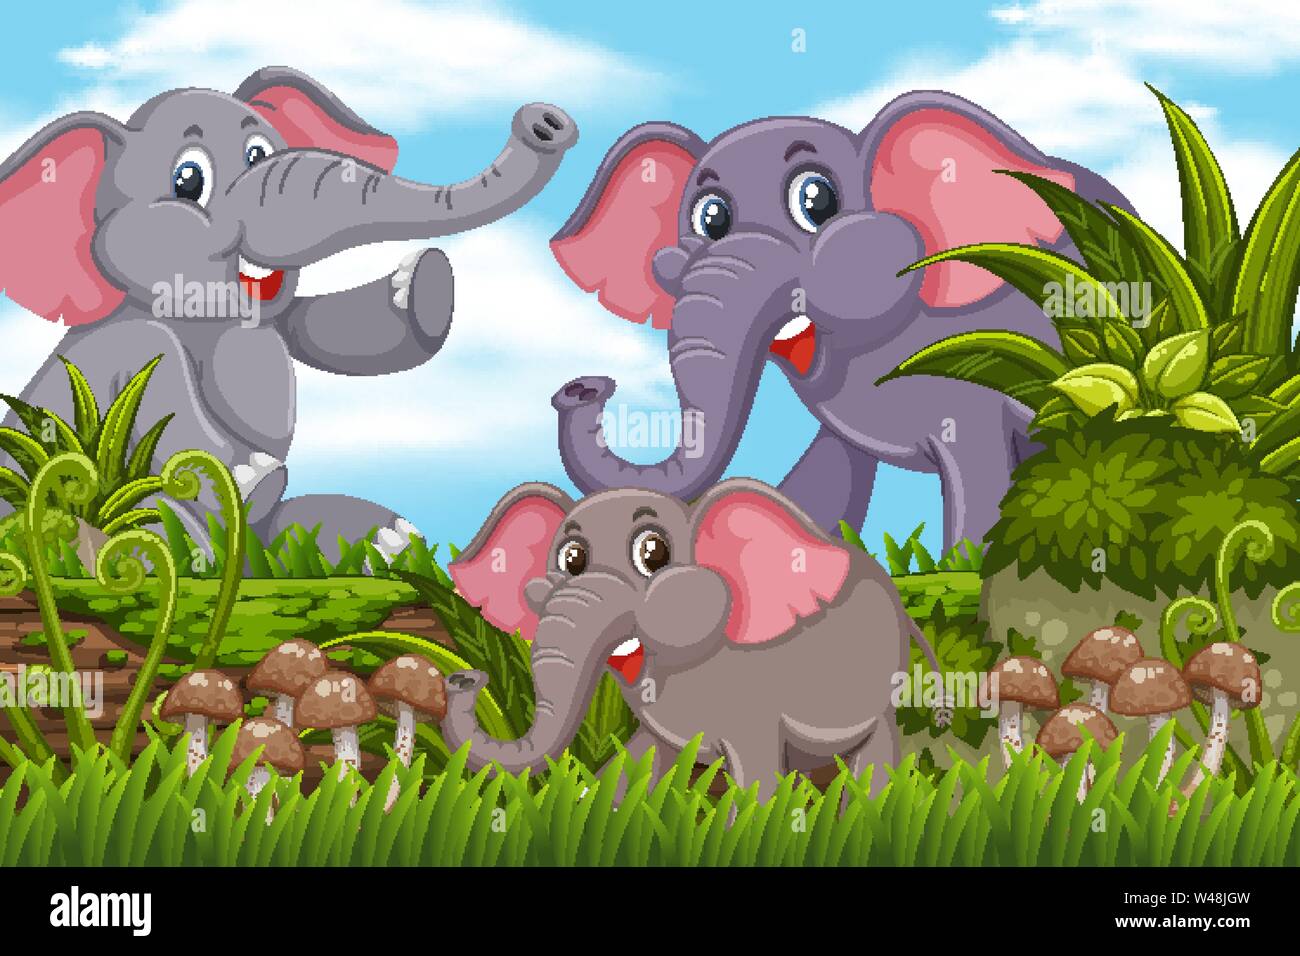 Elefanten im Dschungel Szene Abbildung Stock Vektor